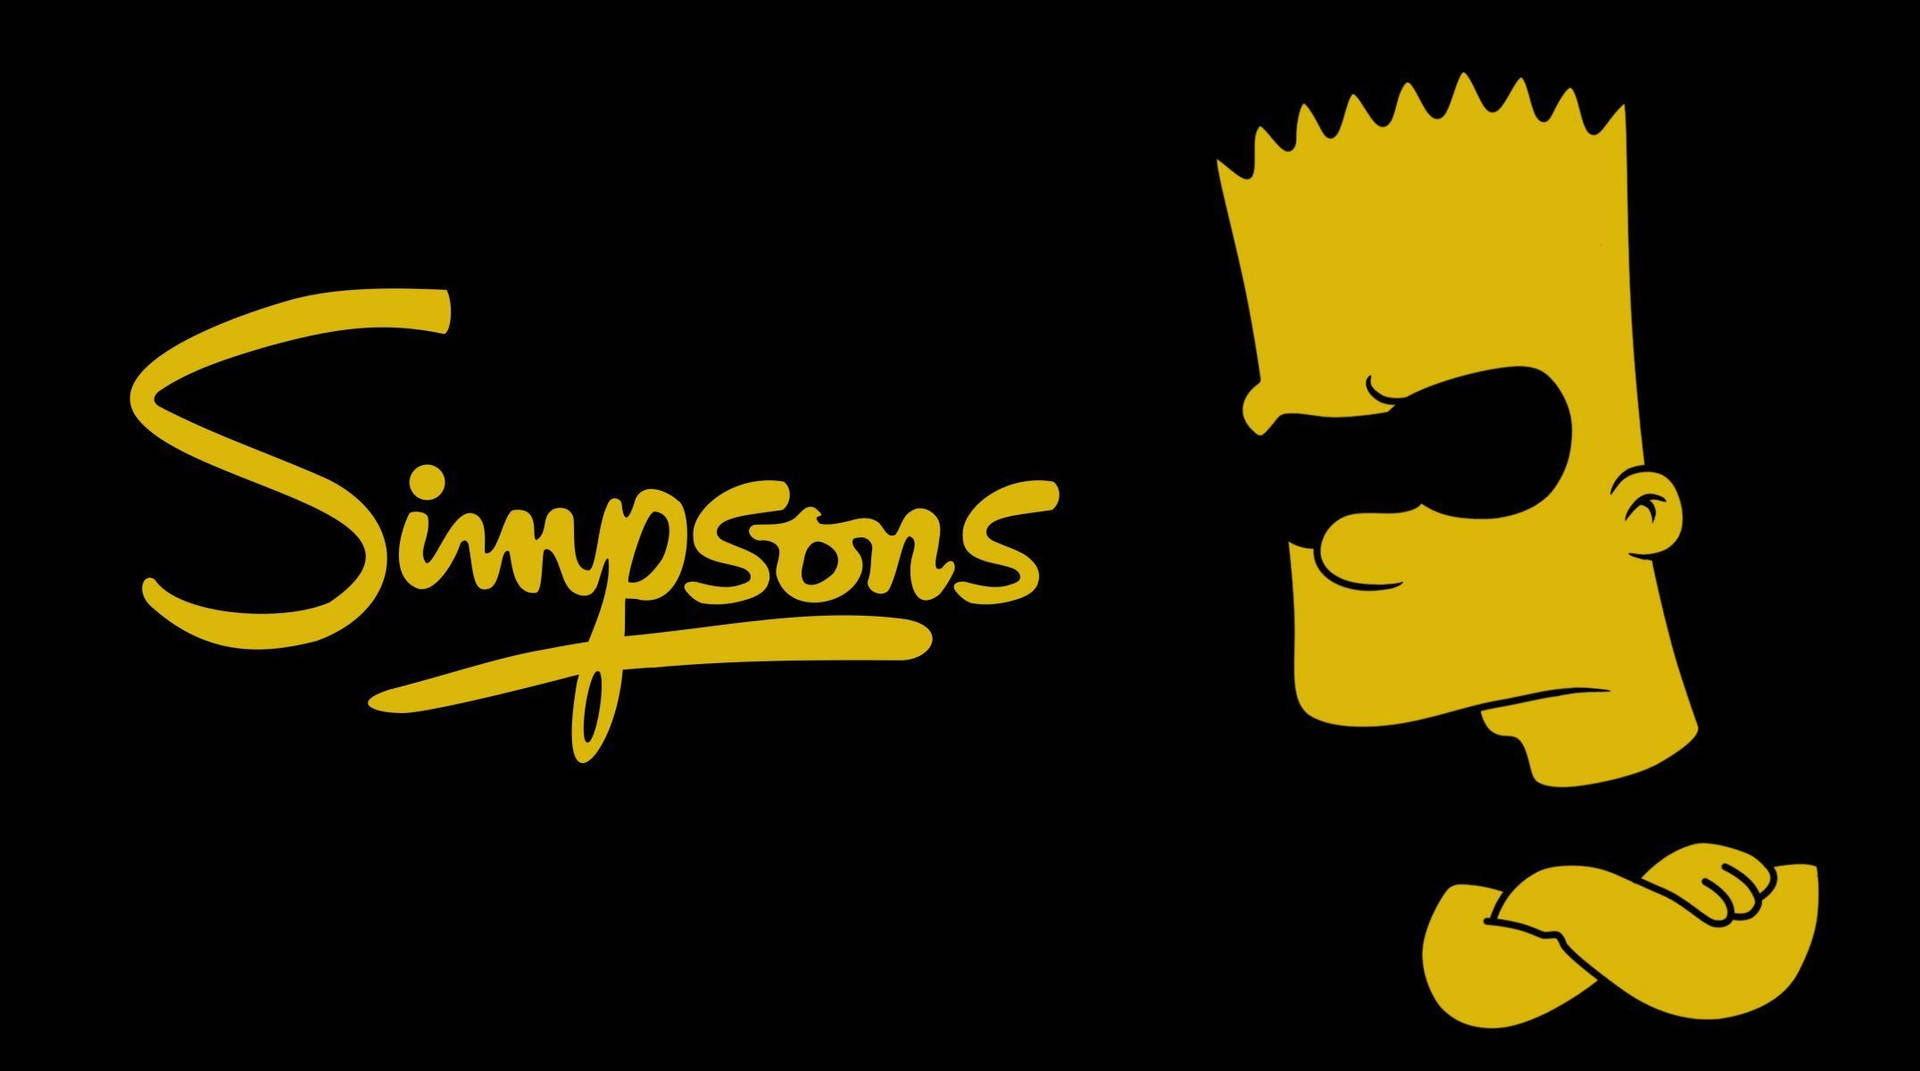 Cool Bart Simpson 2151 X 1200 Wallpaper